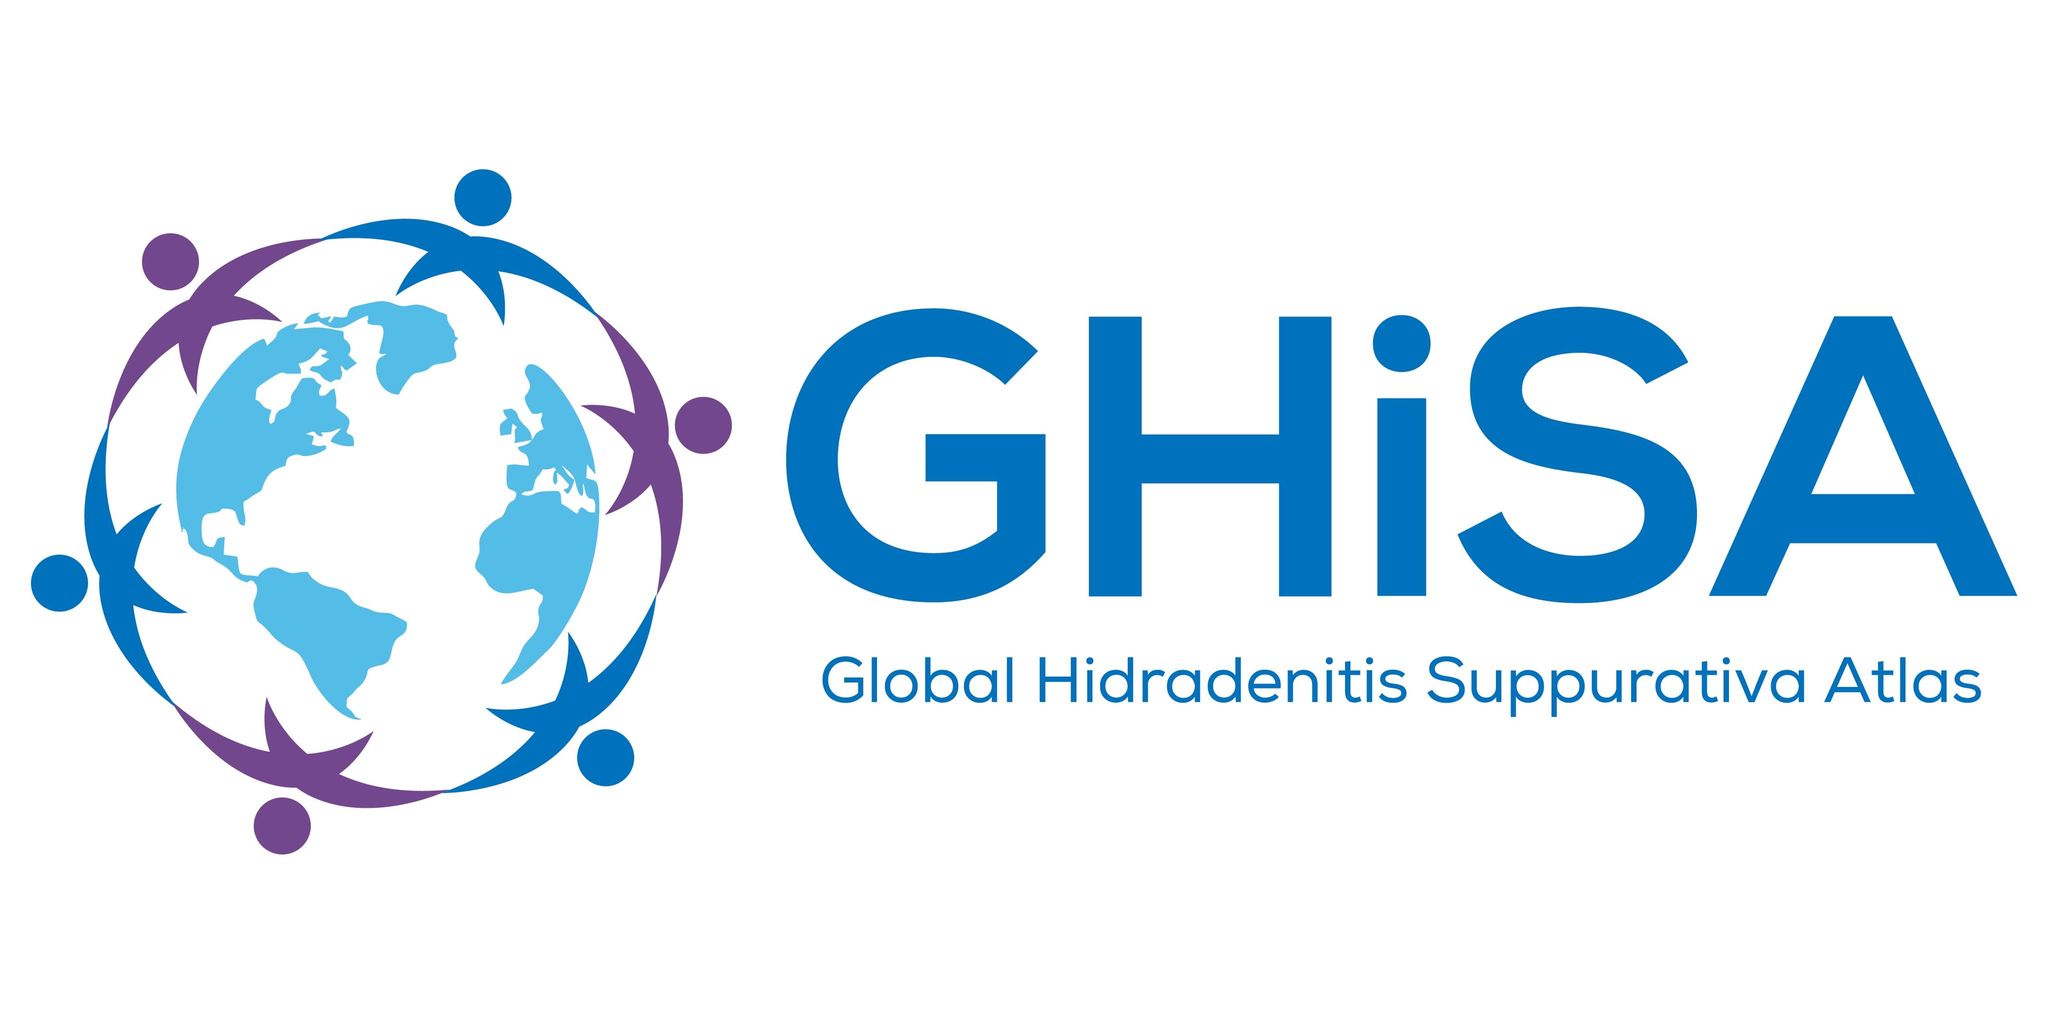 Global Report on Hidradenitis Suppurativa 